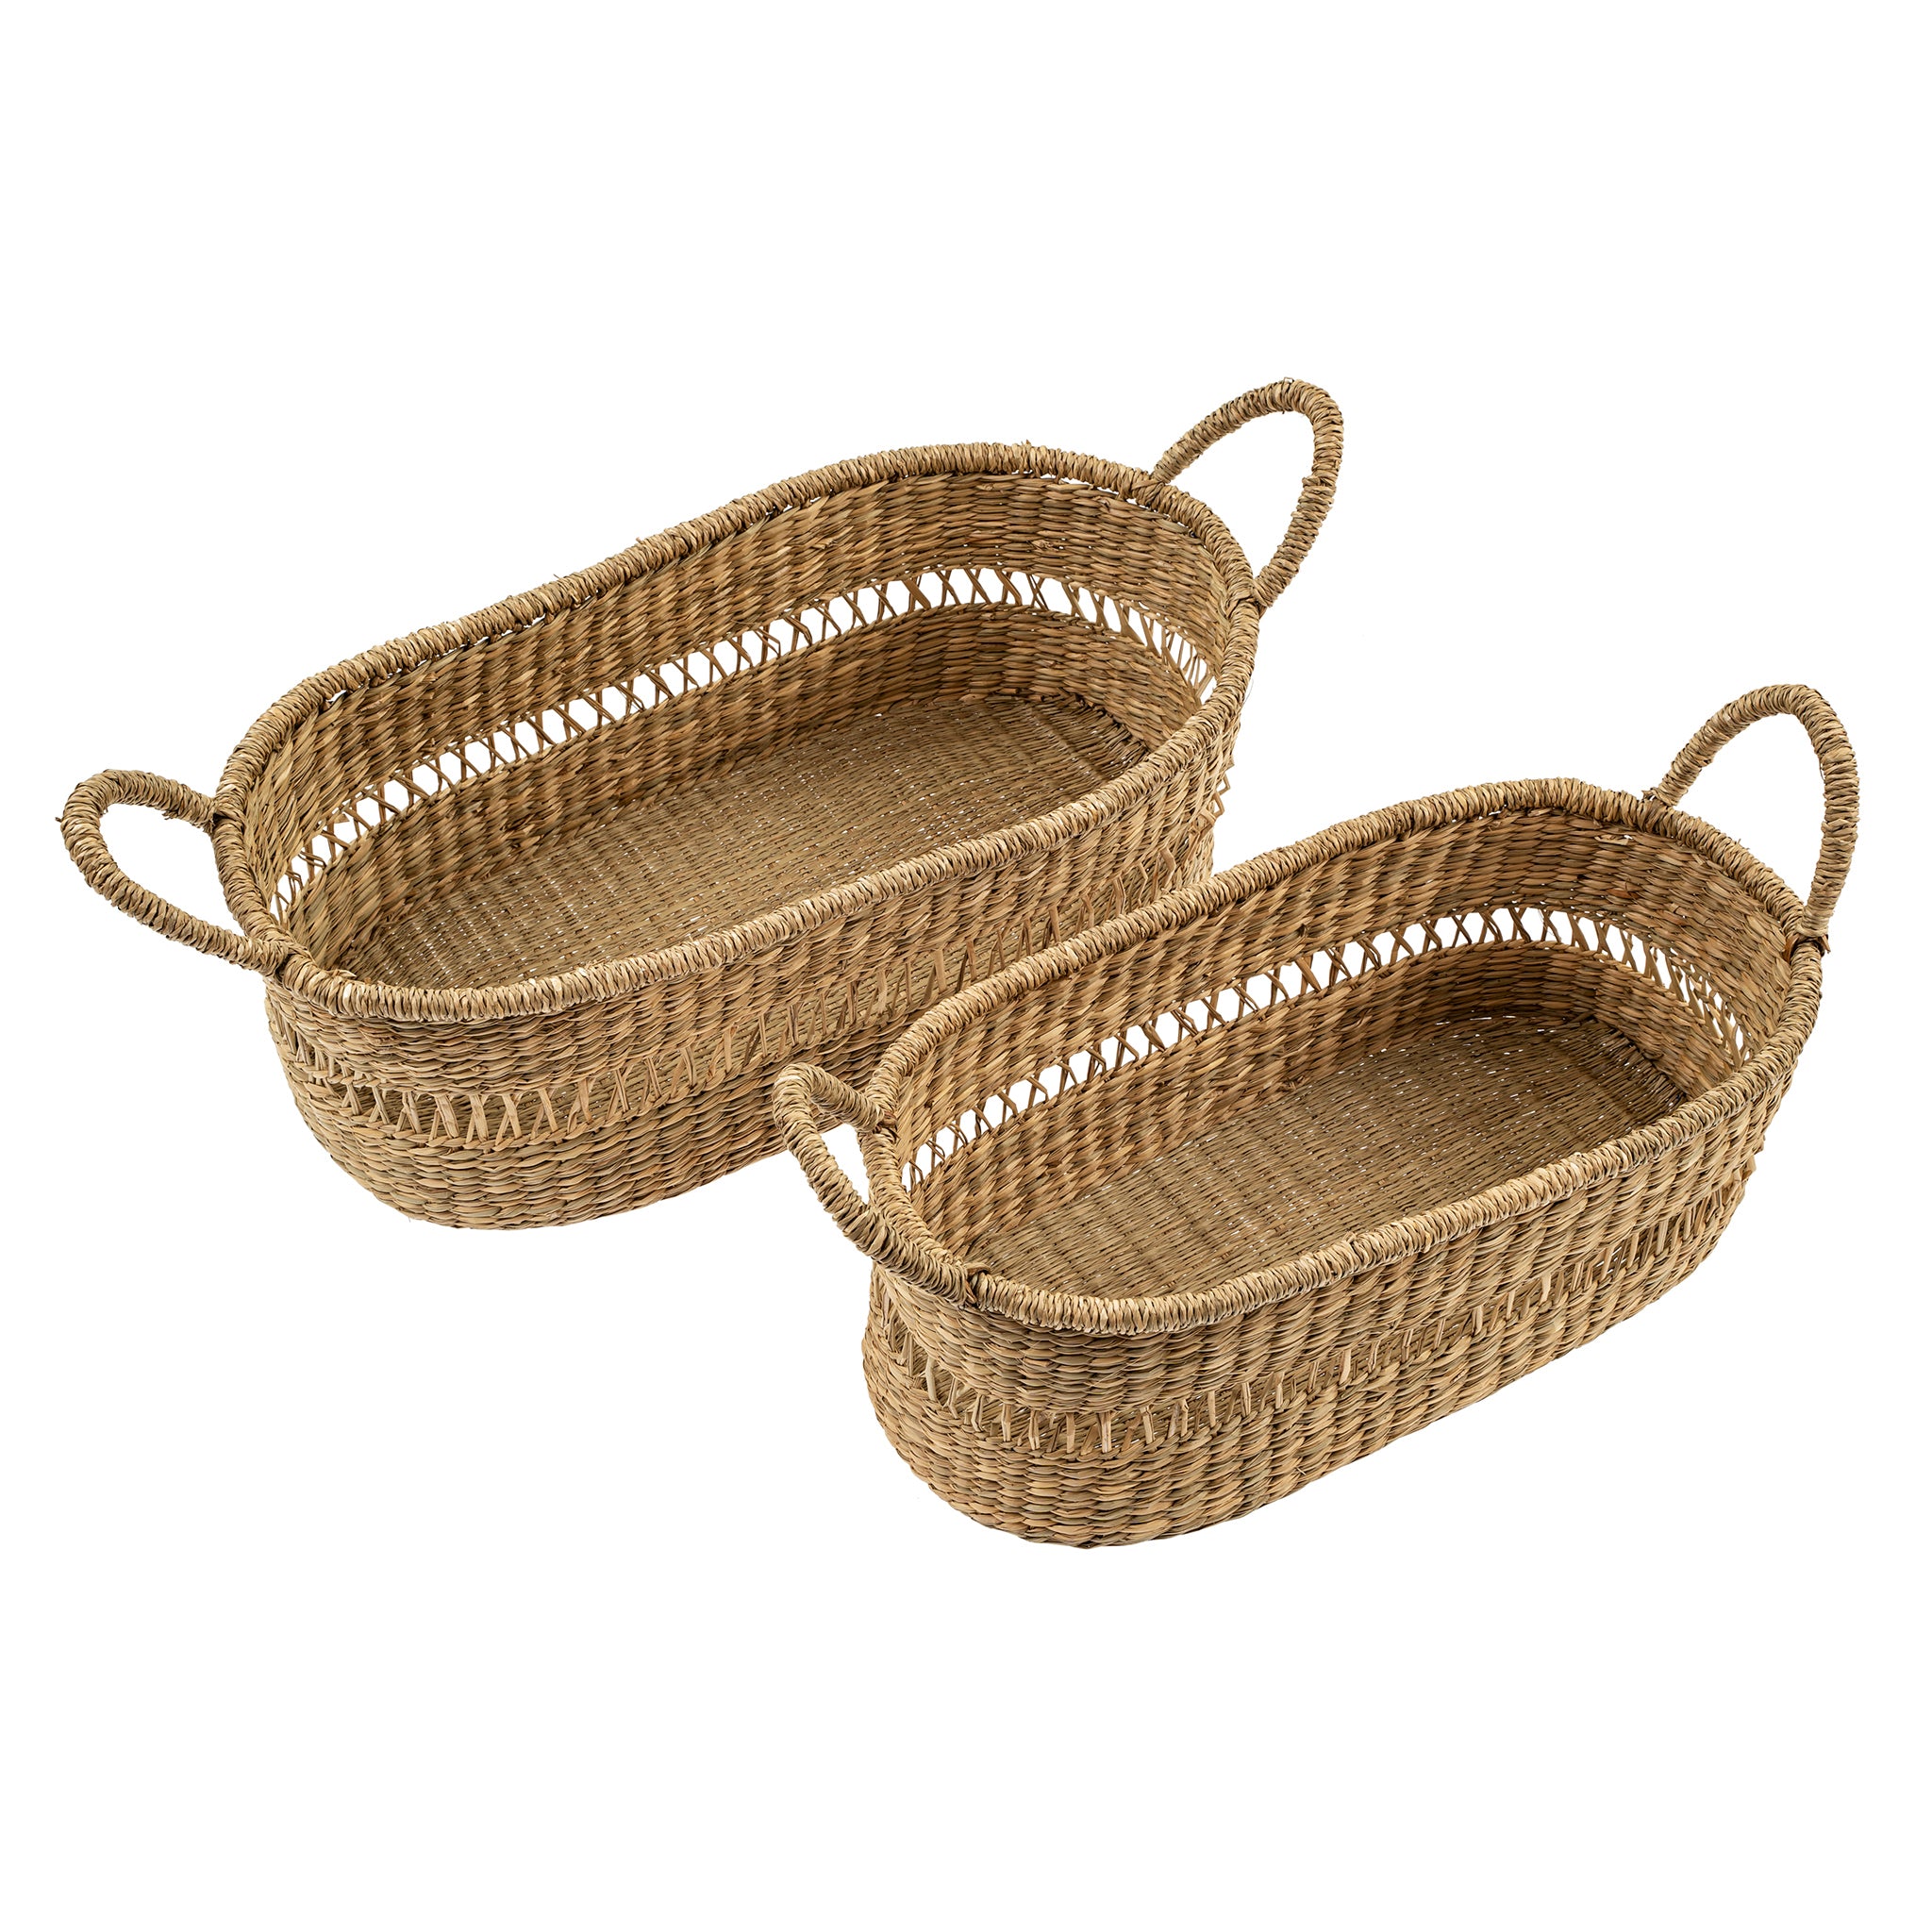 Carolina Seagrass Baskets - 2 sizes